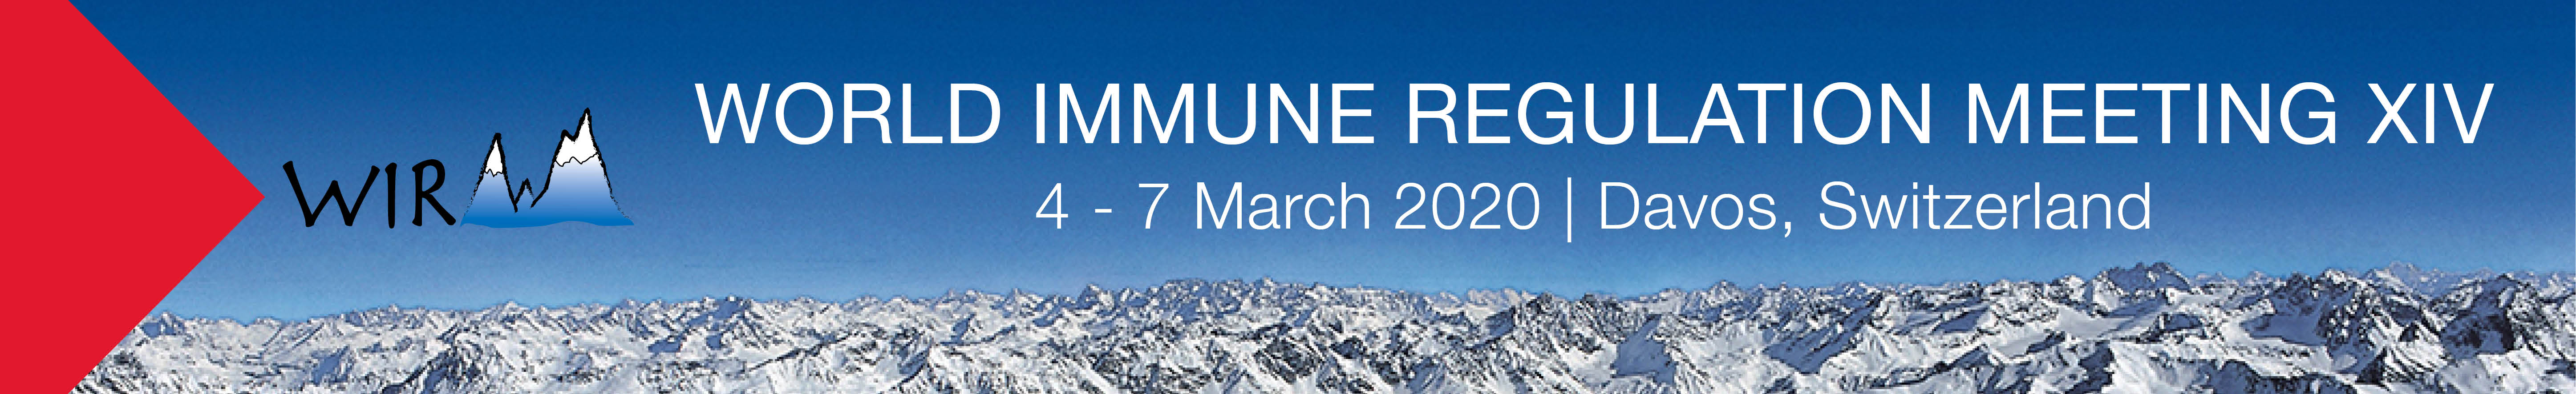 Medflixs WIRM — World Immune Regulation Meeting XIV 2020